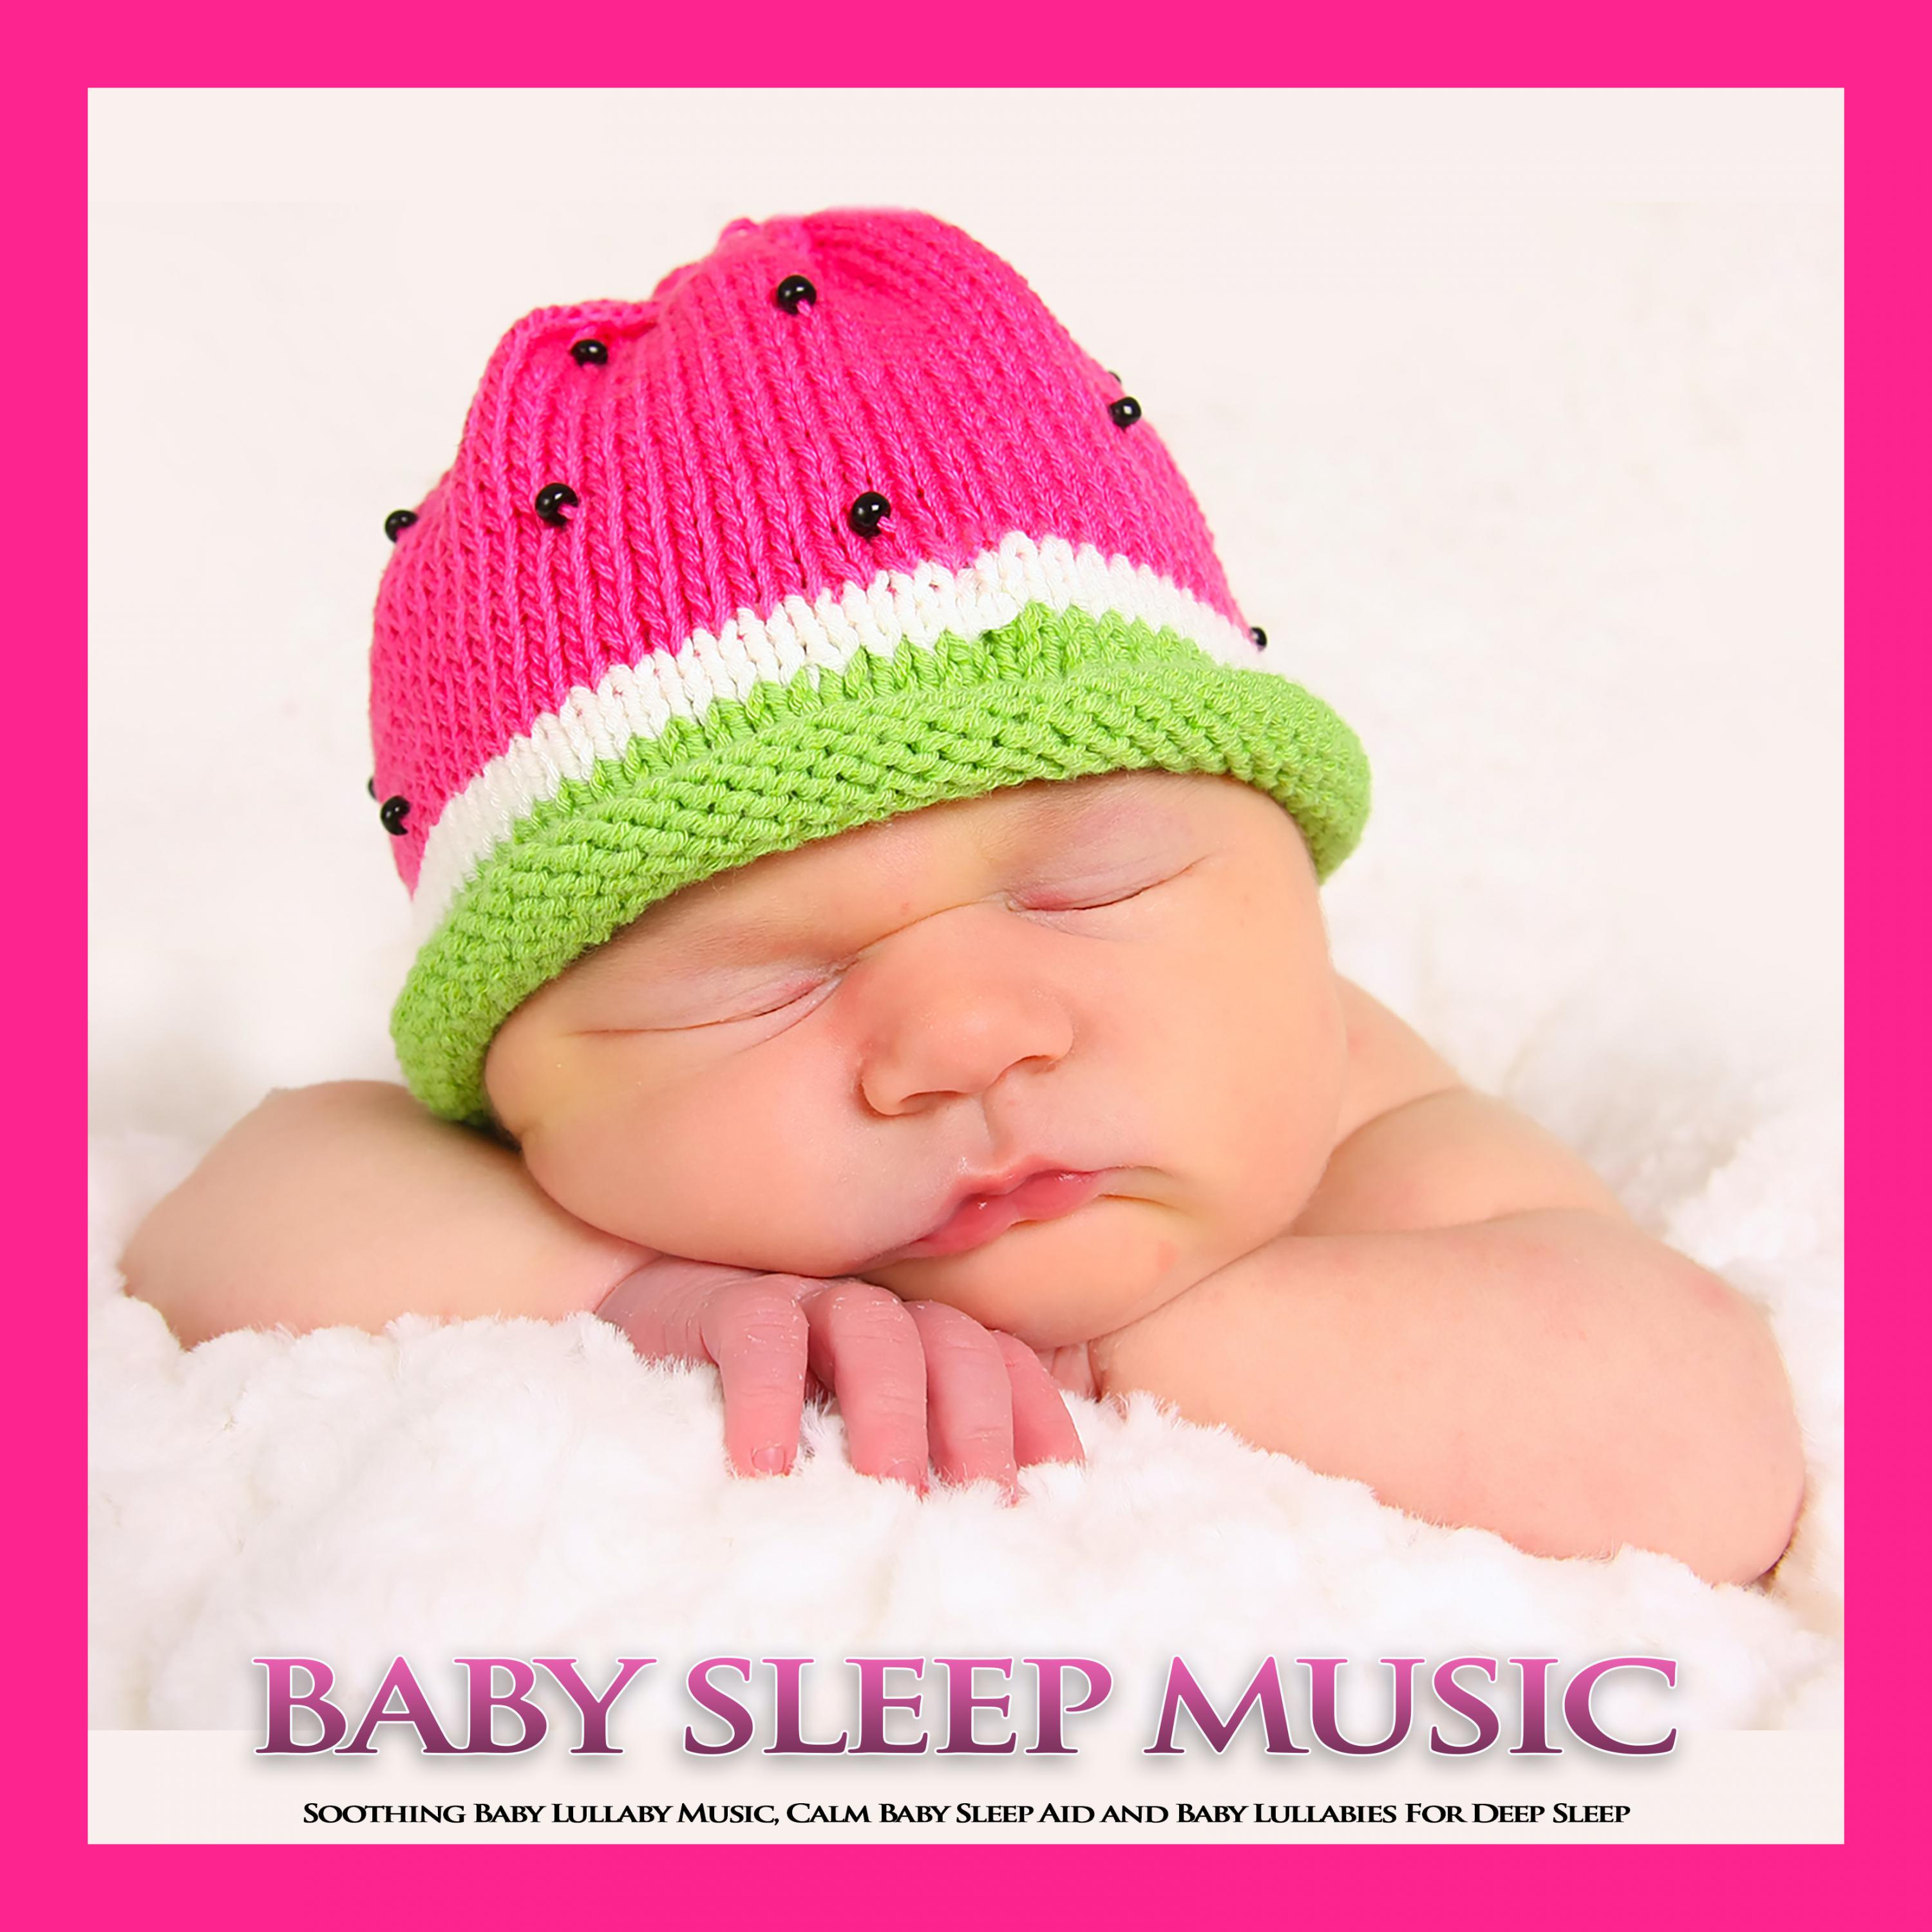 Baby Sleep Music: Soothing Baby Lullaby Music, Calm Baby Sleep Aid and Baby Lullabies For Deep Sleep